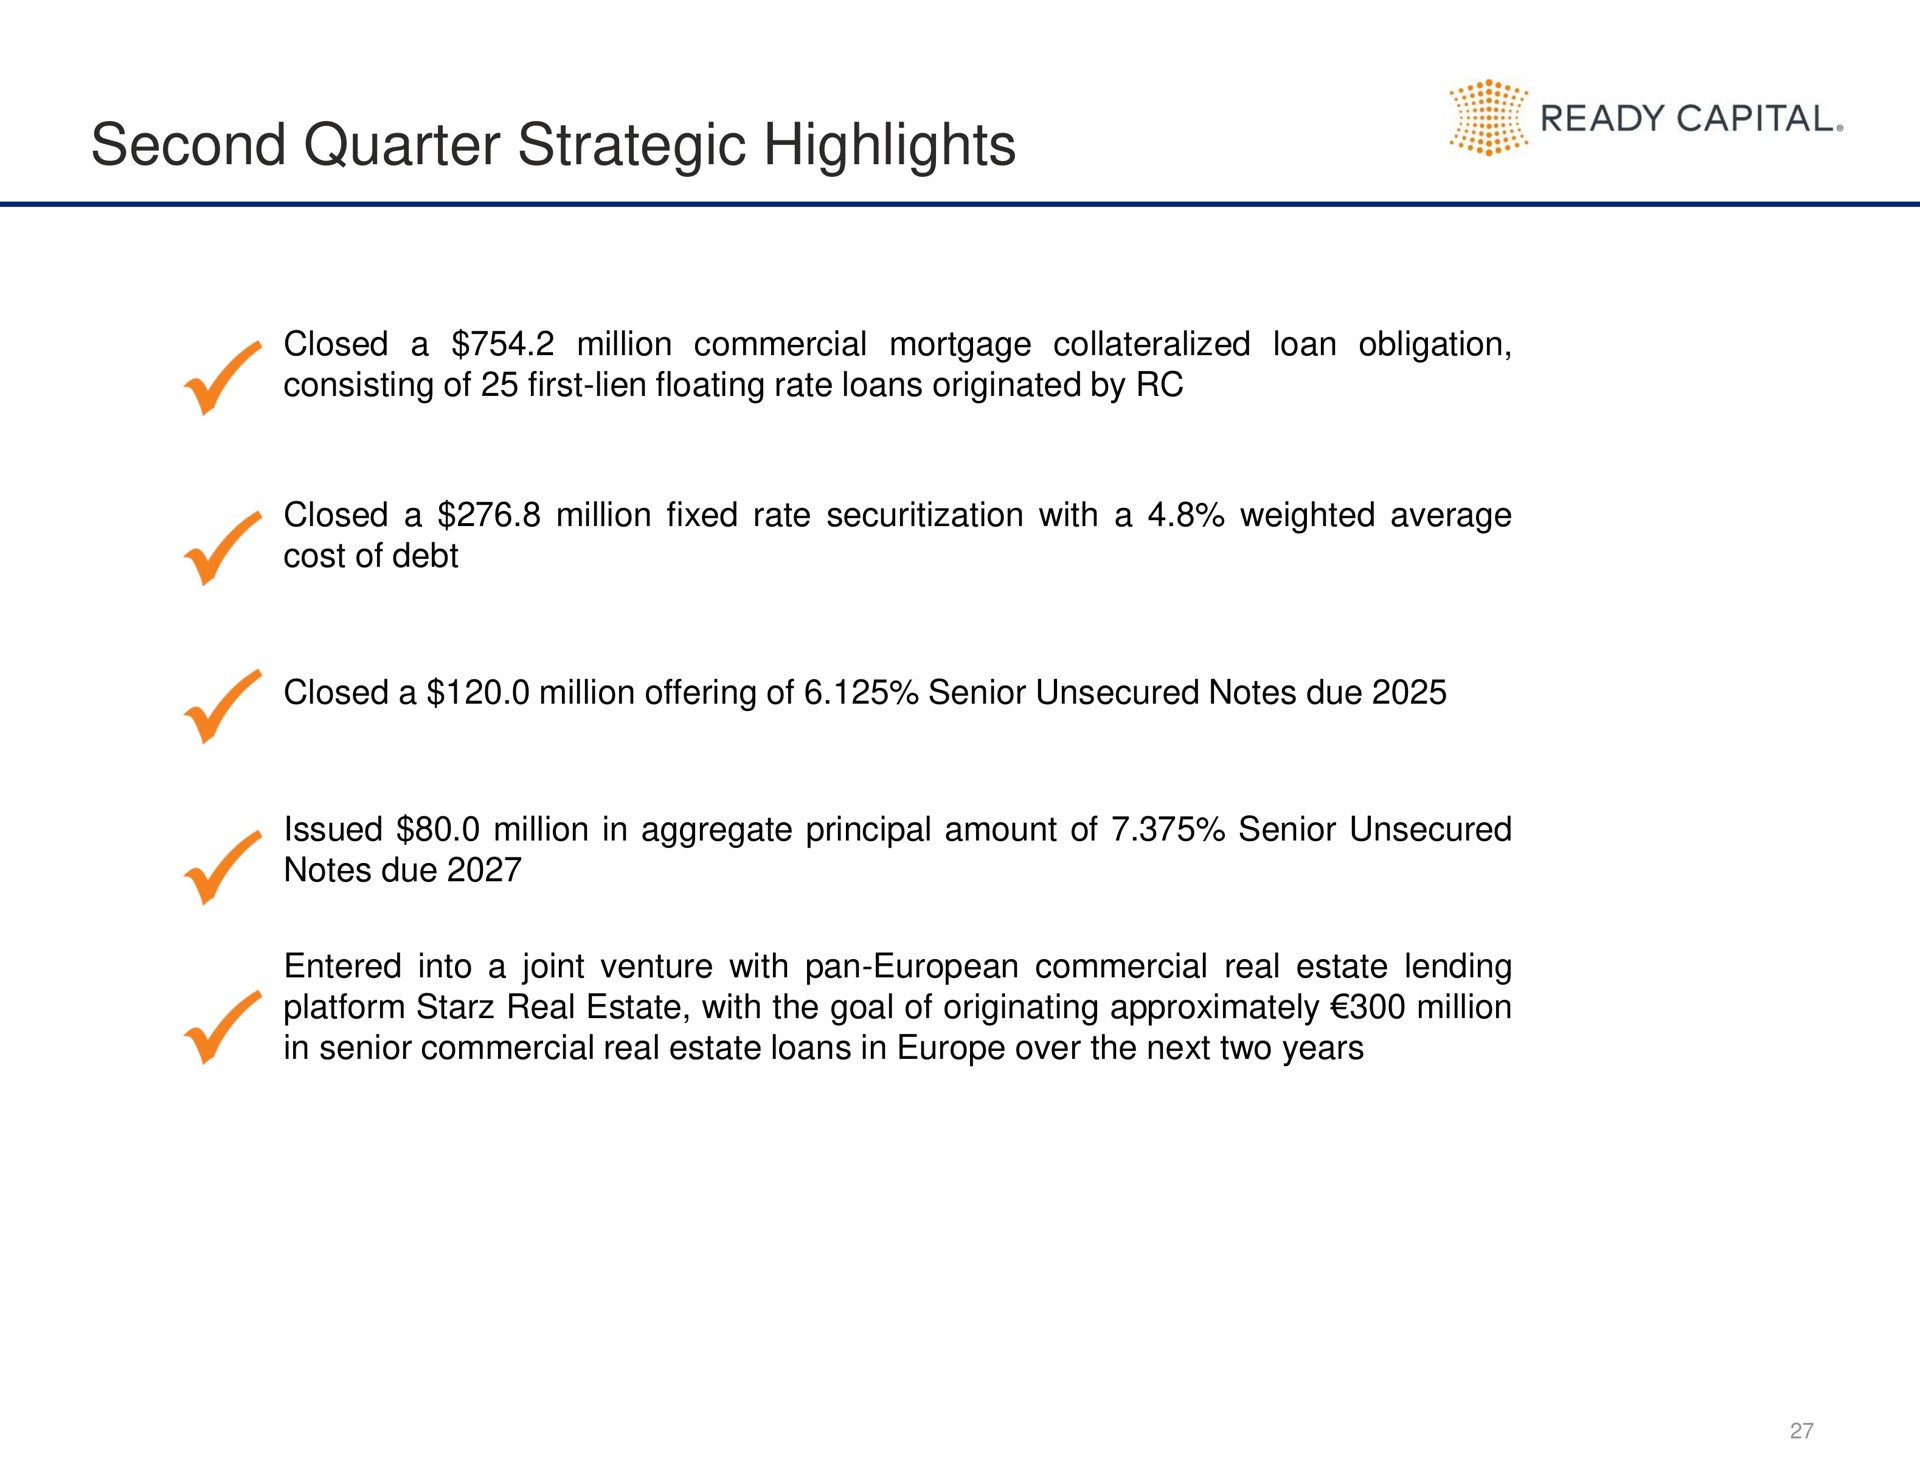 second quarter strategic highlights ready capital | Ready Capital